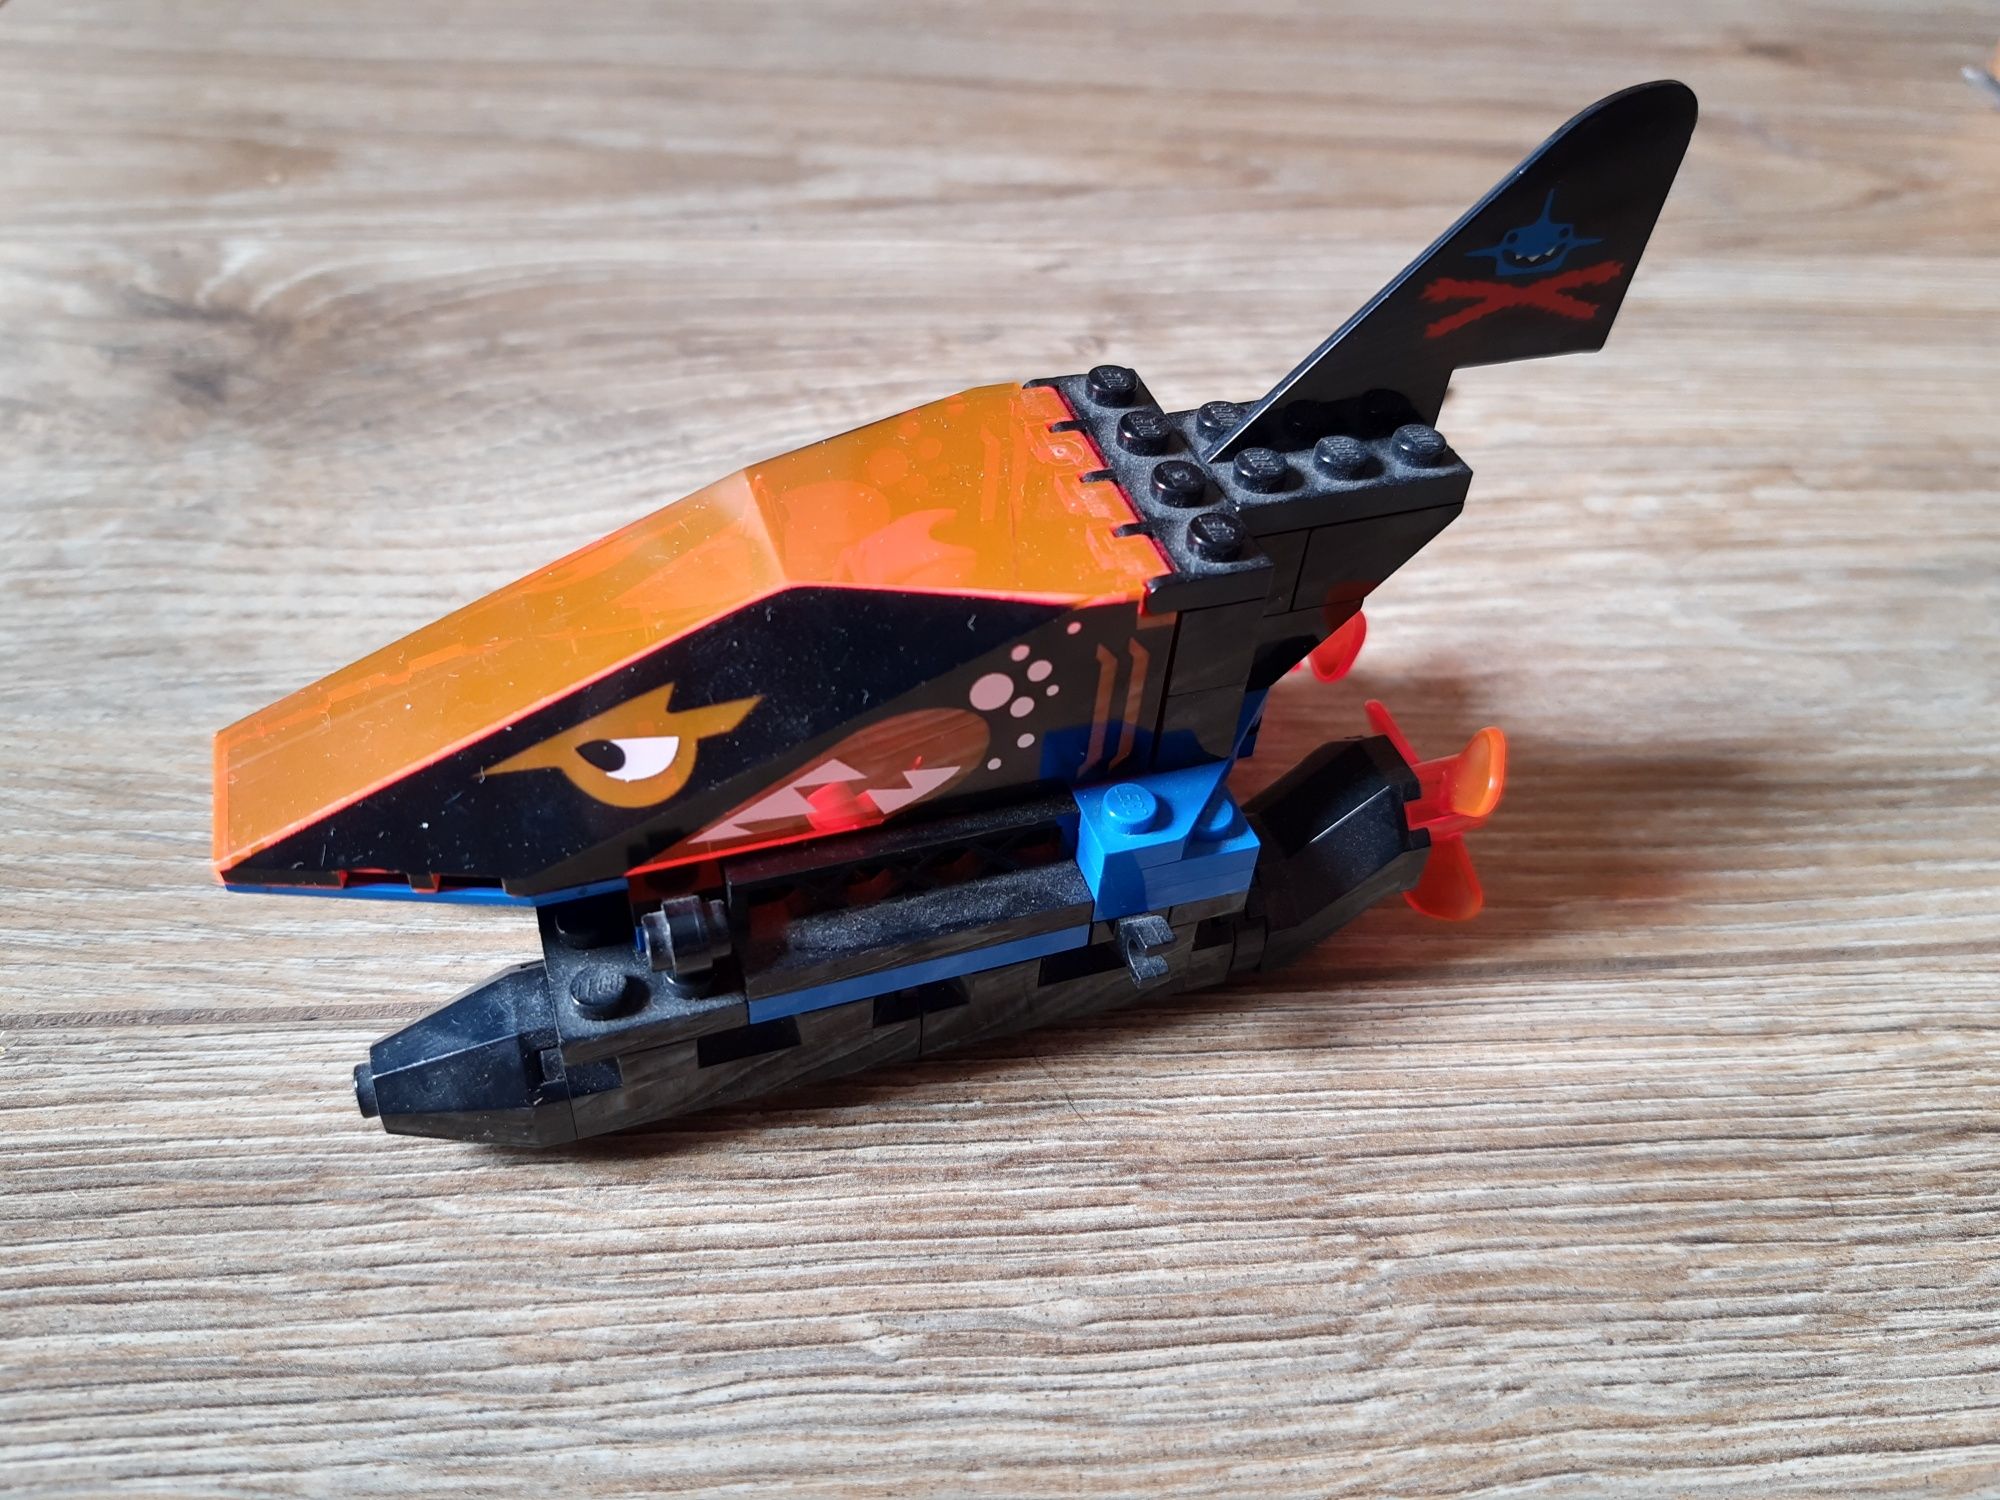 Lego 6135 rekin oryginał